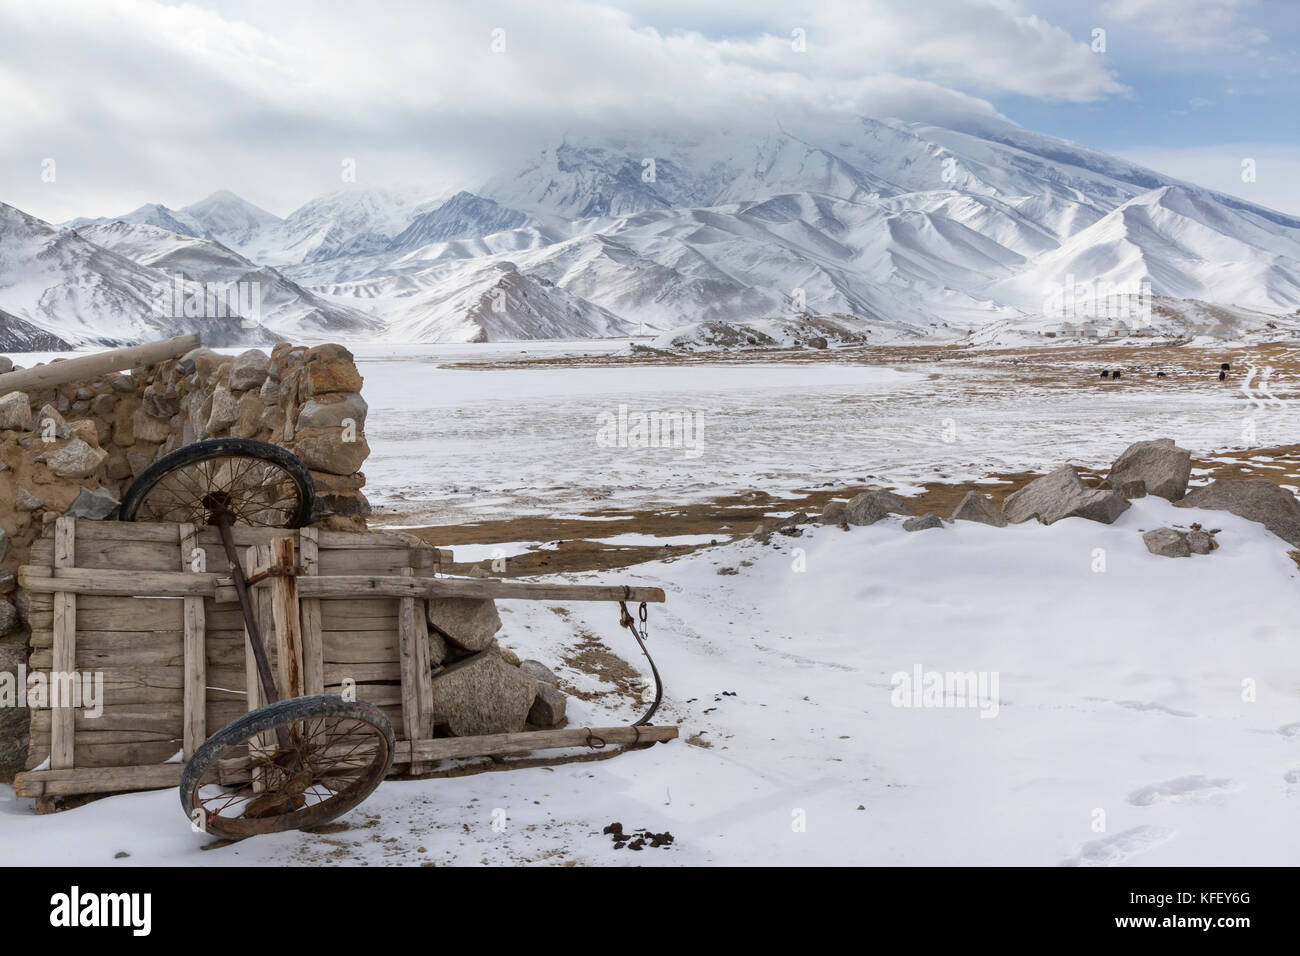 Vista invernal de Mustagh Ata en el karakul lago de montaña en las montañas de Pamir, Kizilsu Prefectura Autónoma Kirguiz, Xinjiang, China Foto de stock